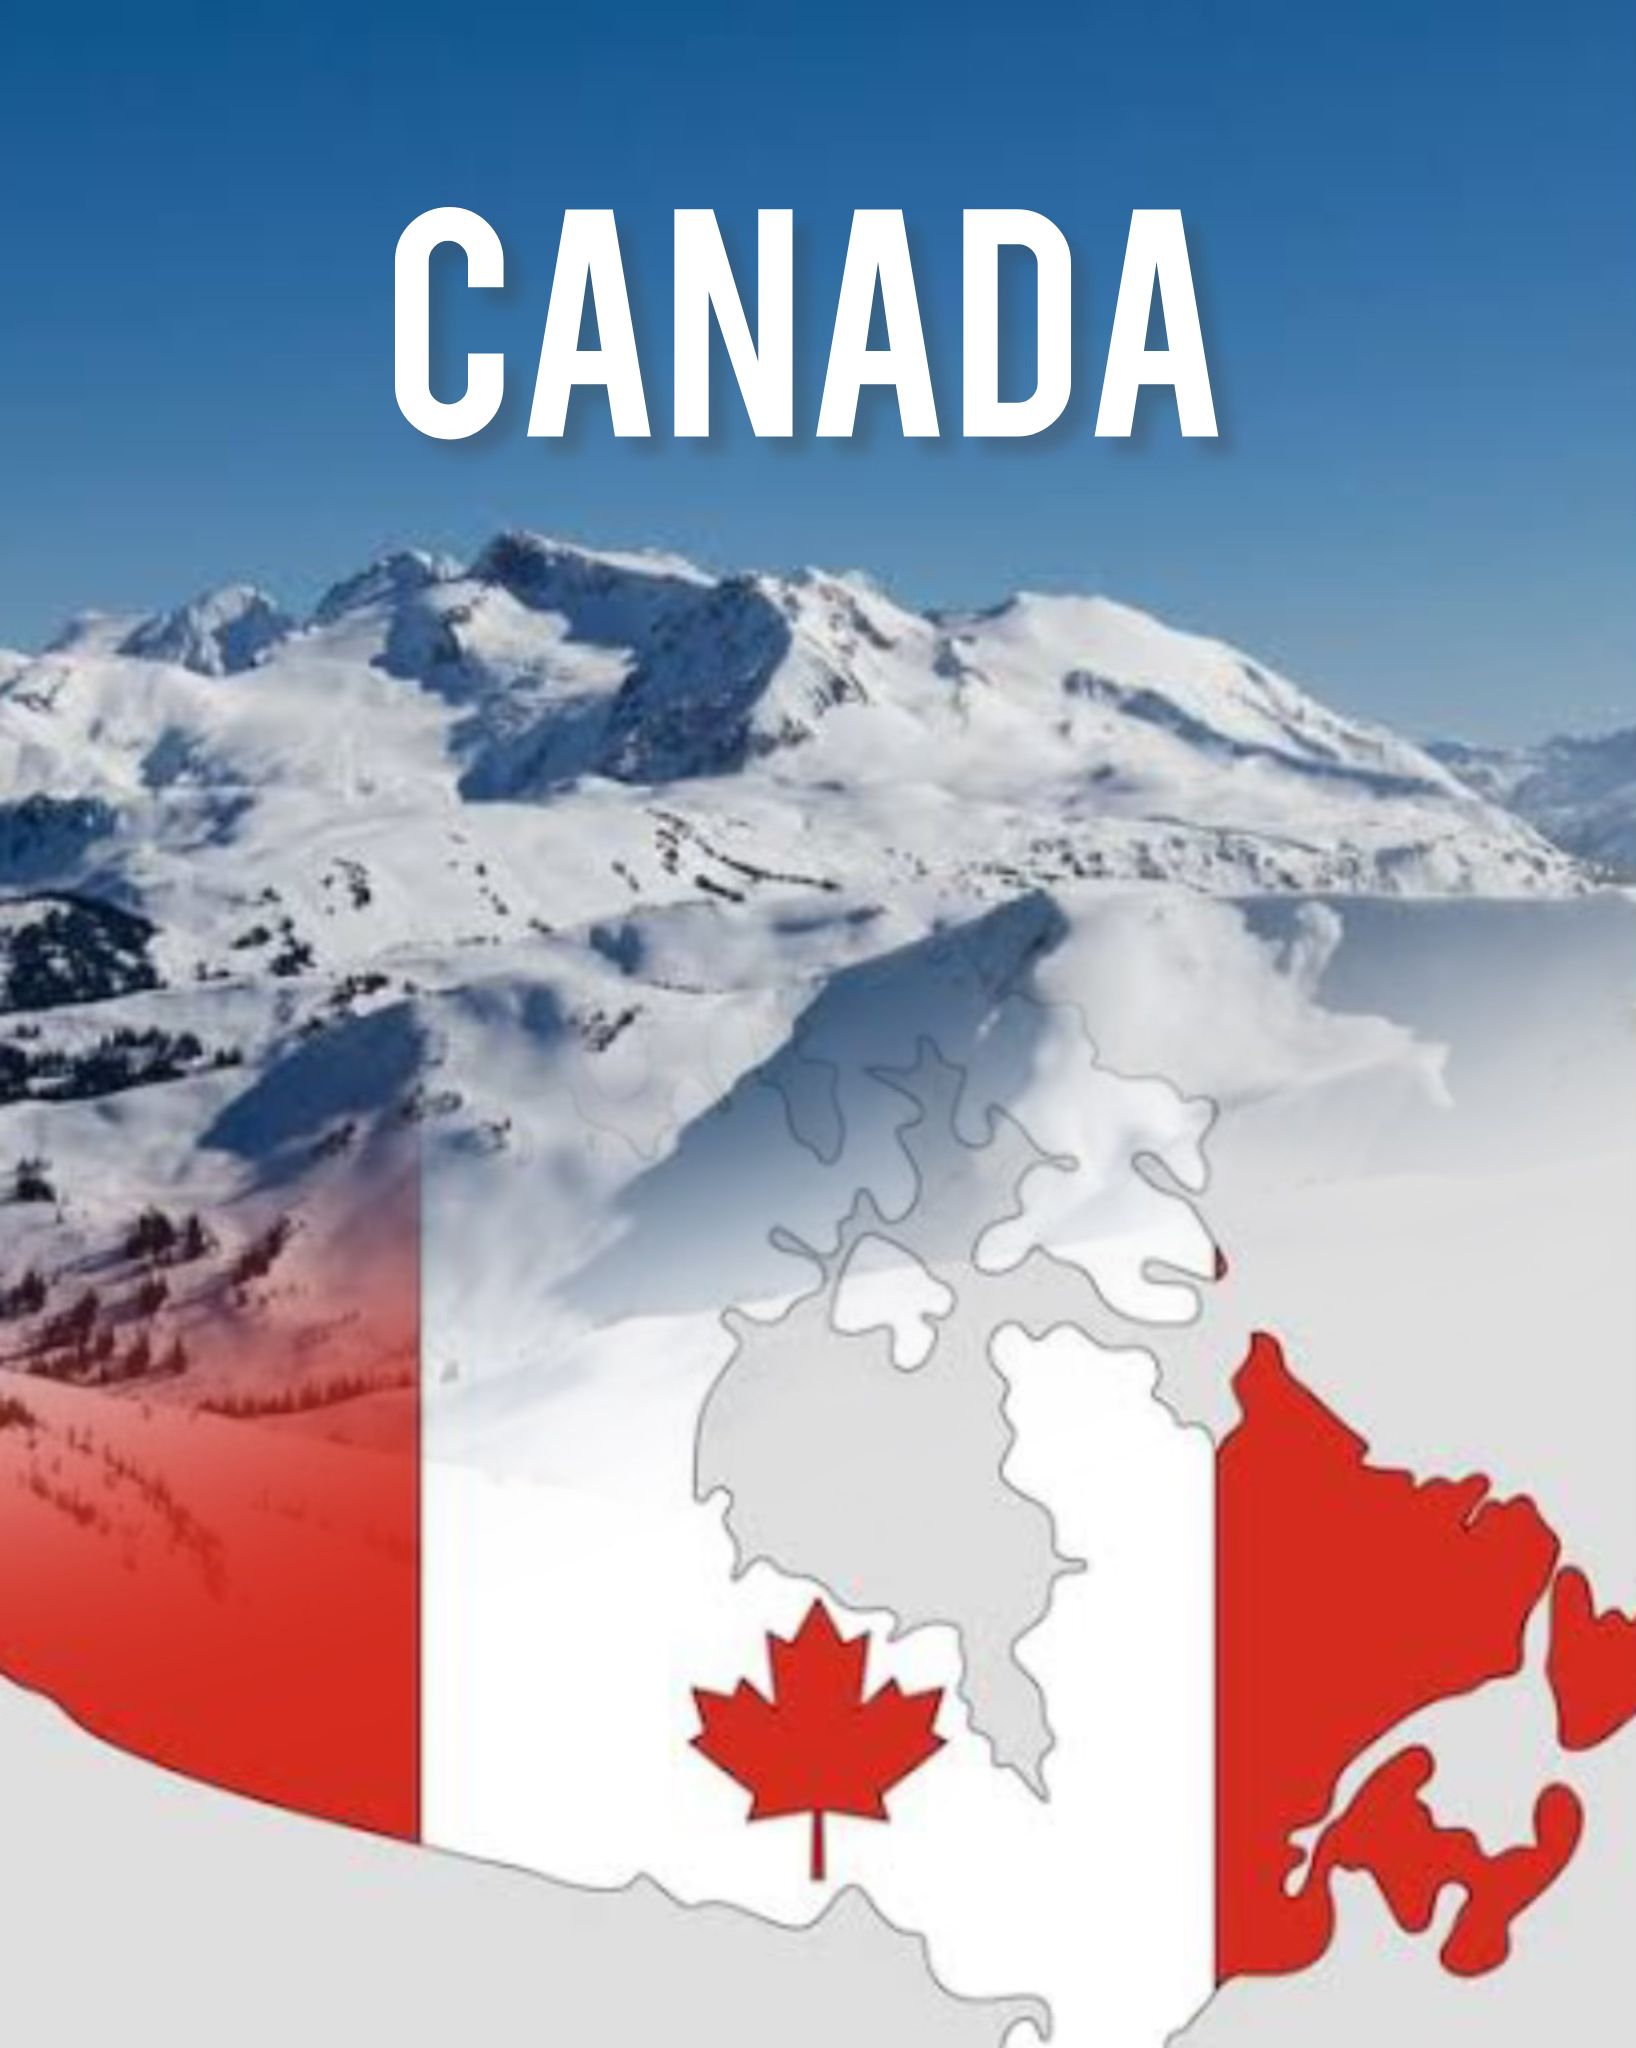 Canada image 93